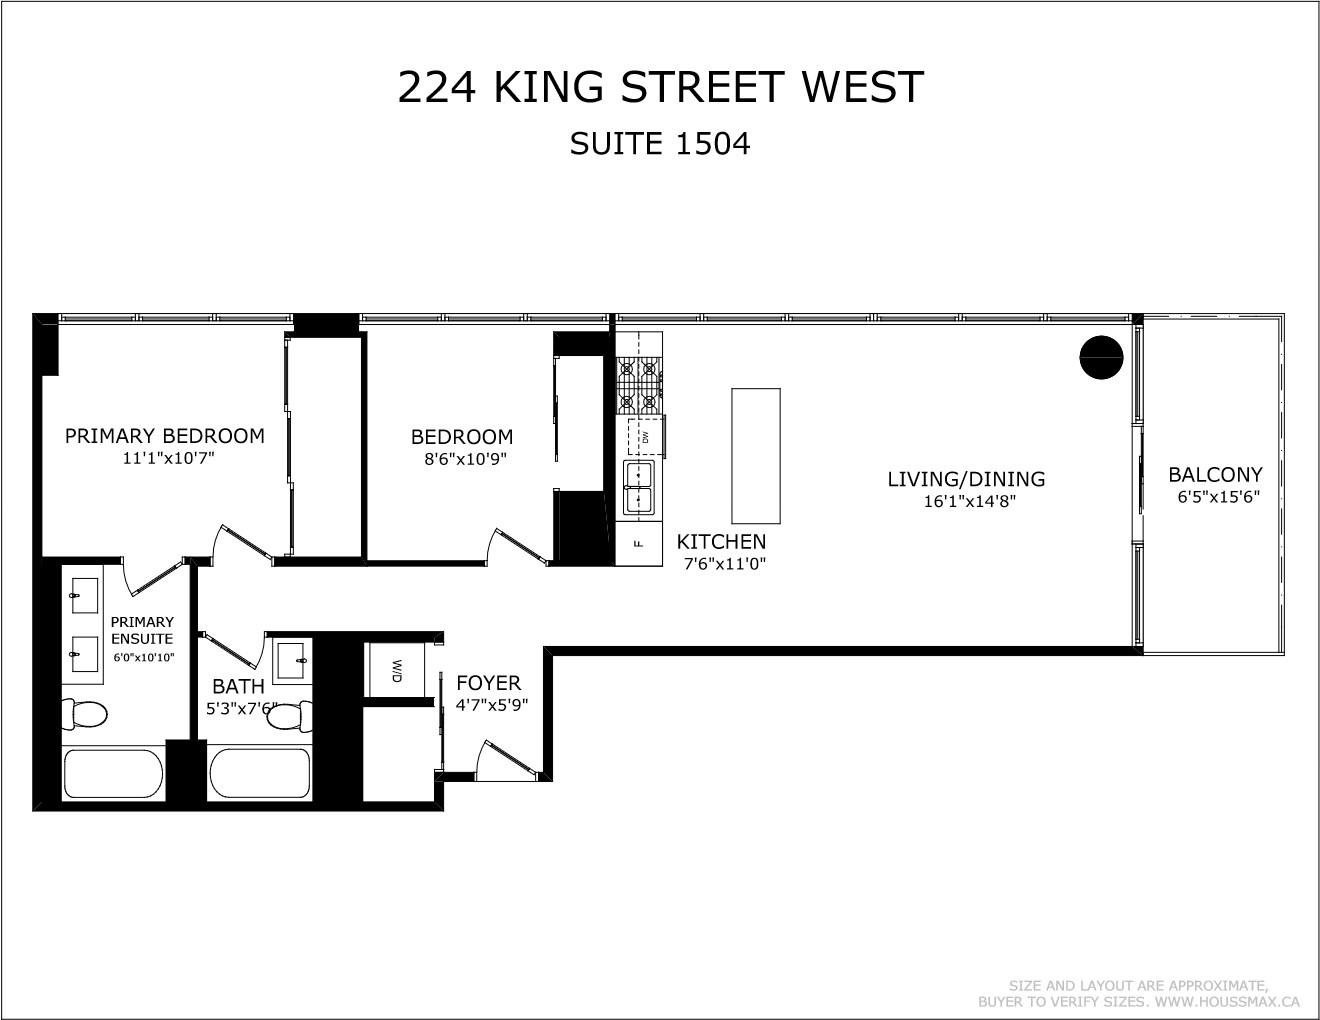 Floor plans for 224 King St W Unit 1504.